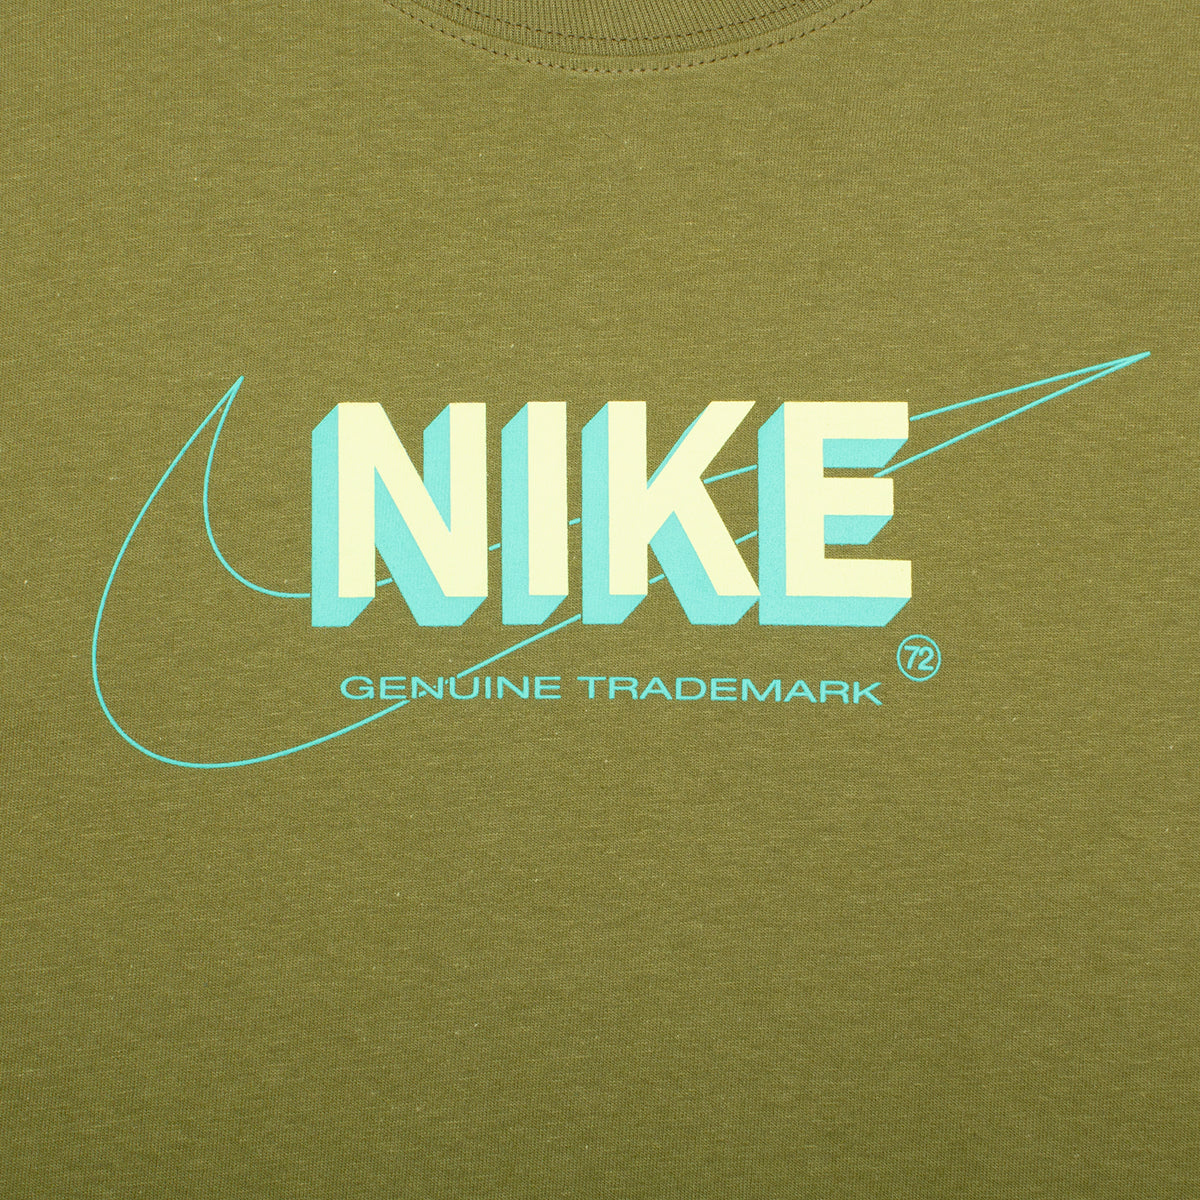 Nike SB HBR T-Shirt